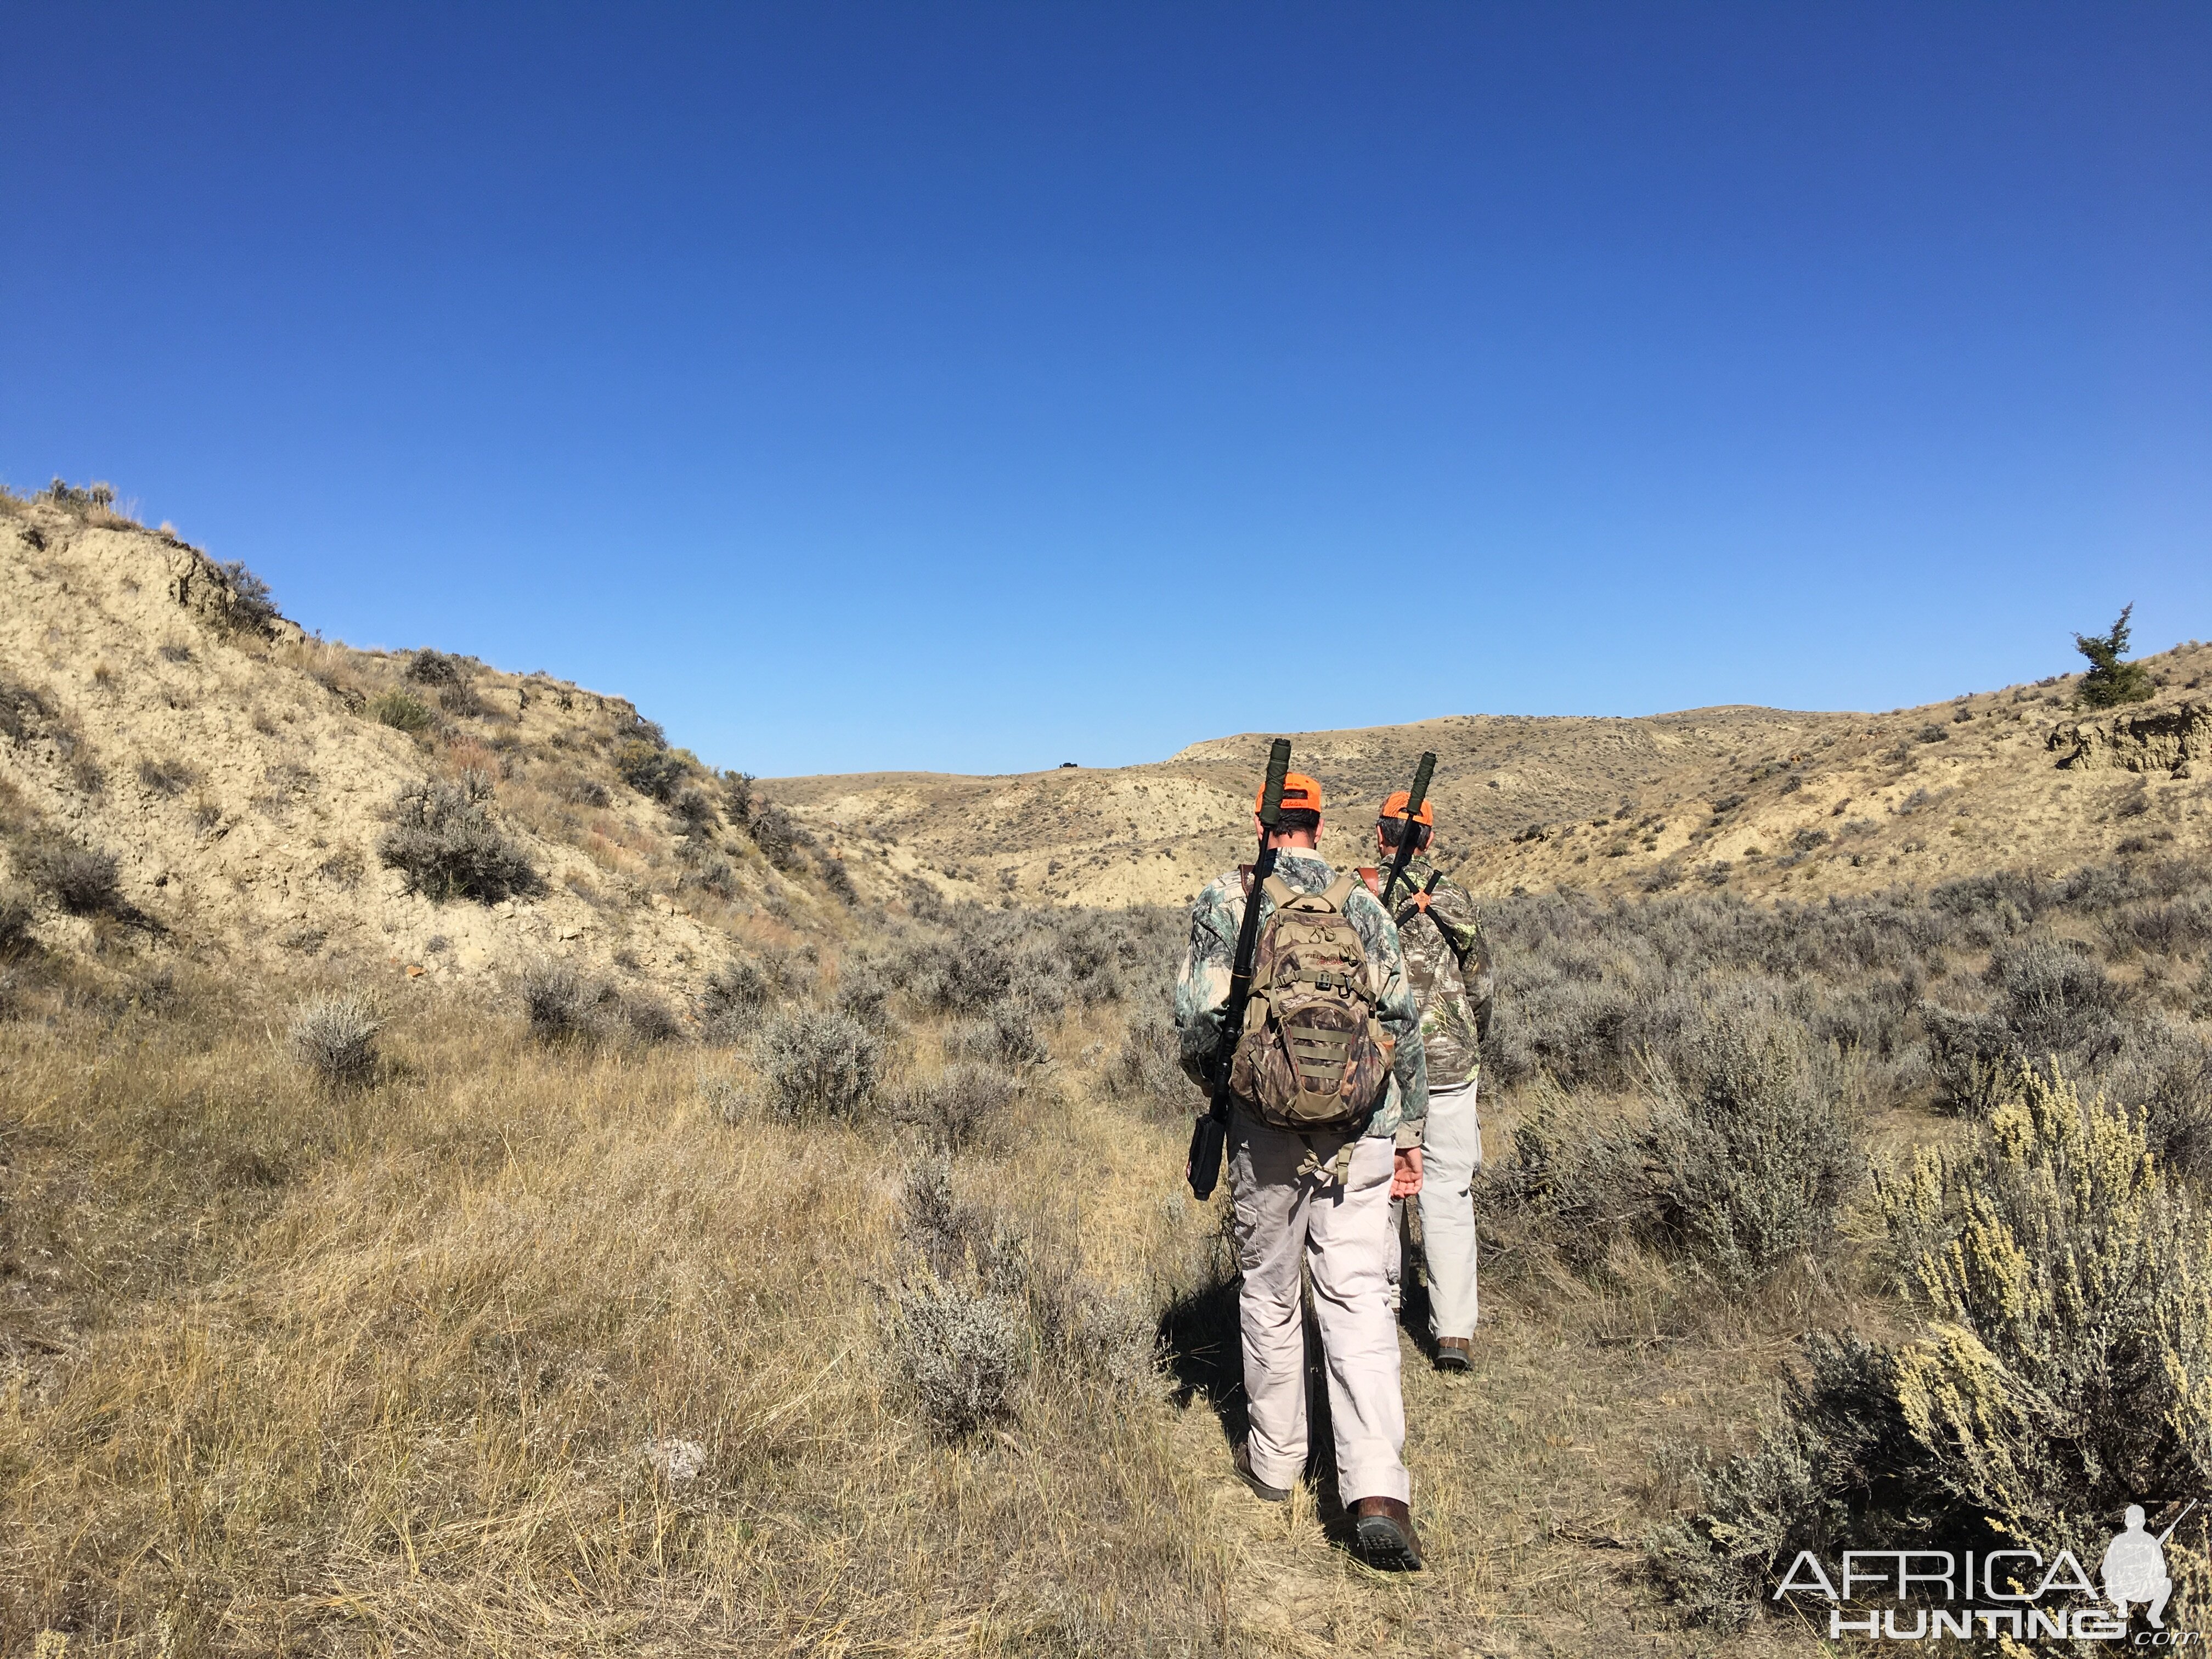 Wyoming USA Hunting Deer & Pronghorn